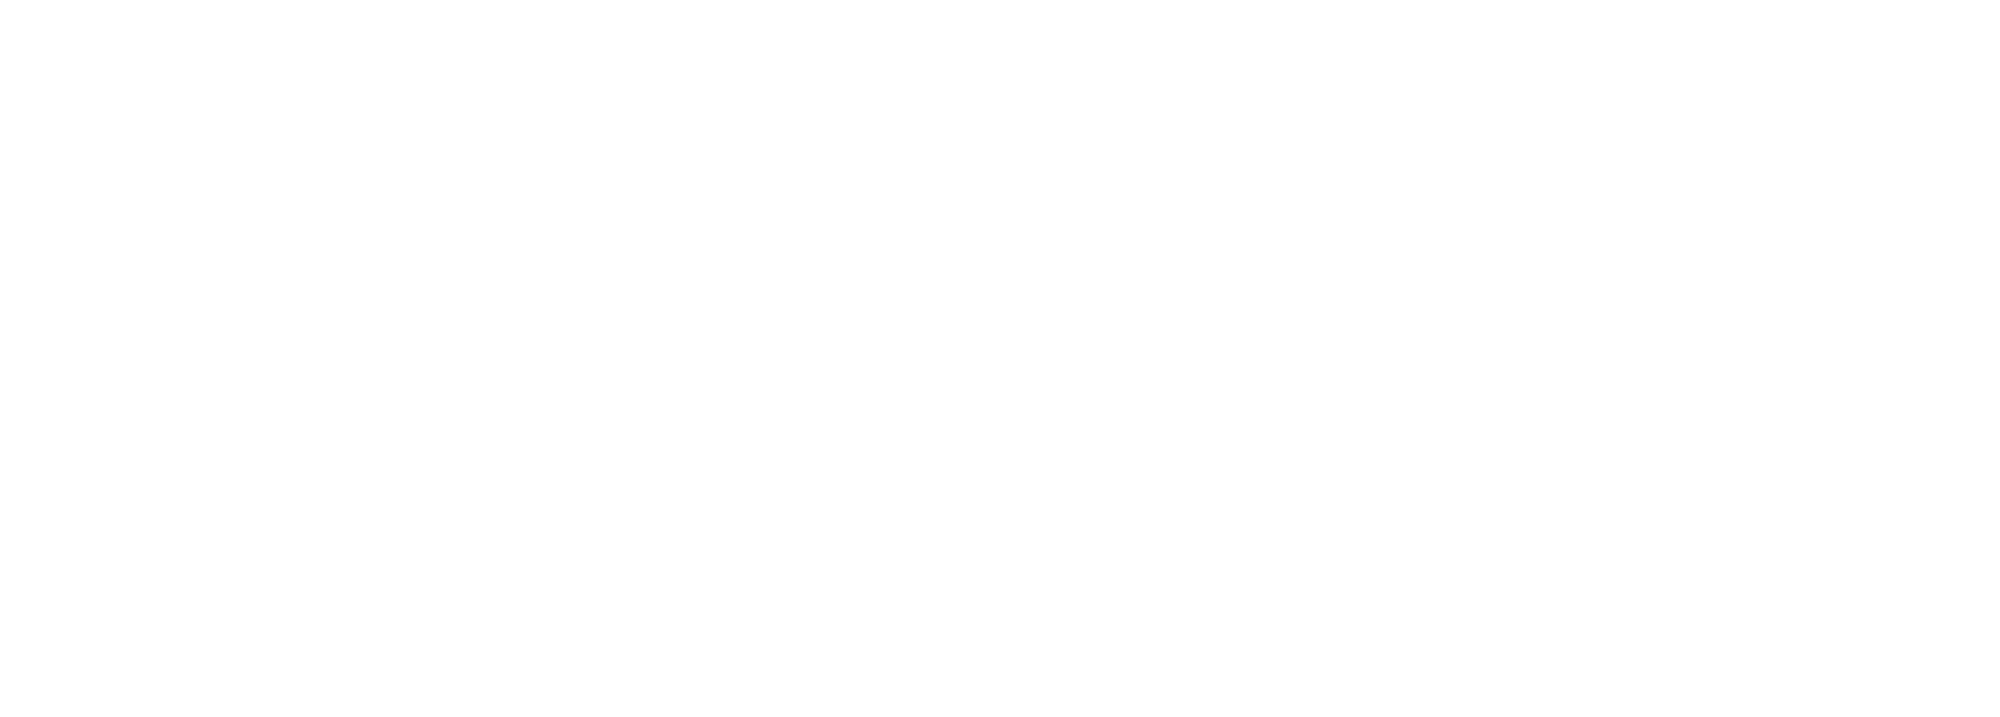 Scientific Machine Learning - Uppsala University